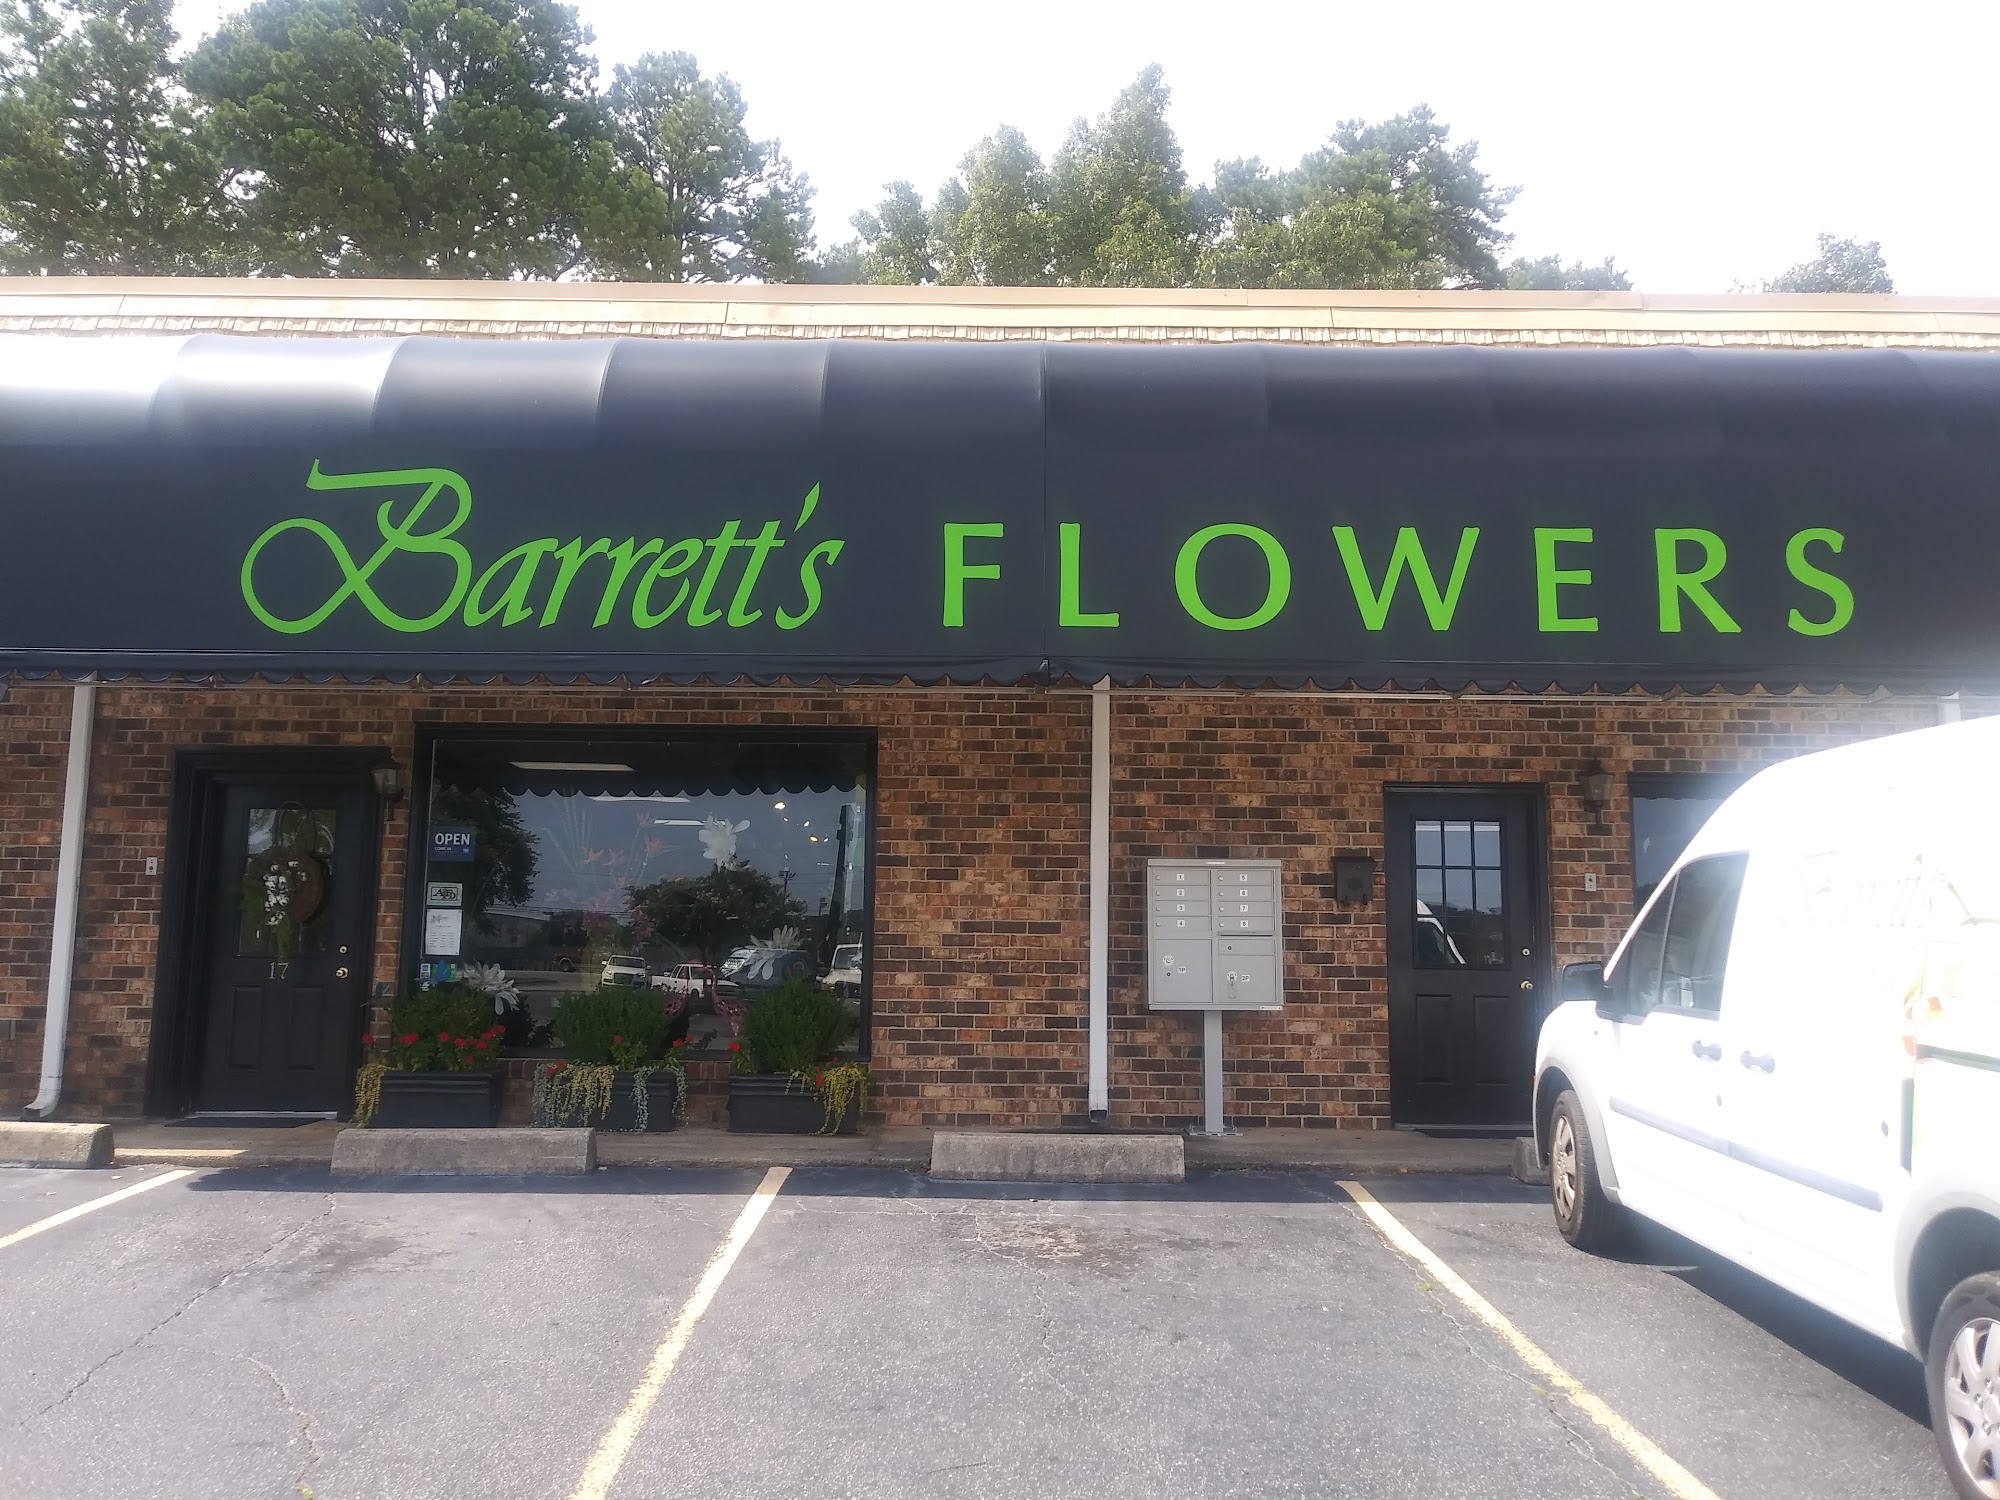 Barrett's Flowers